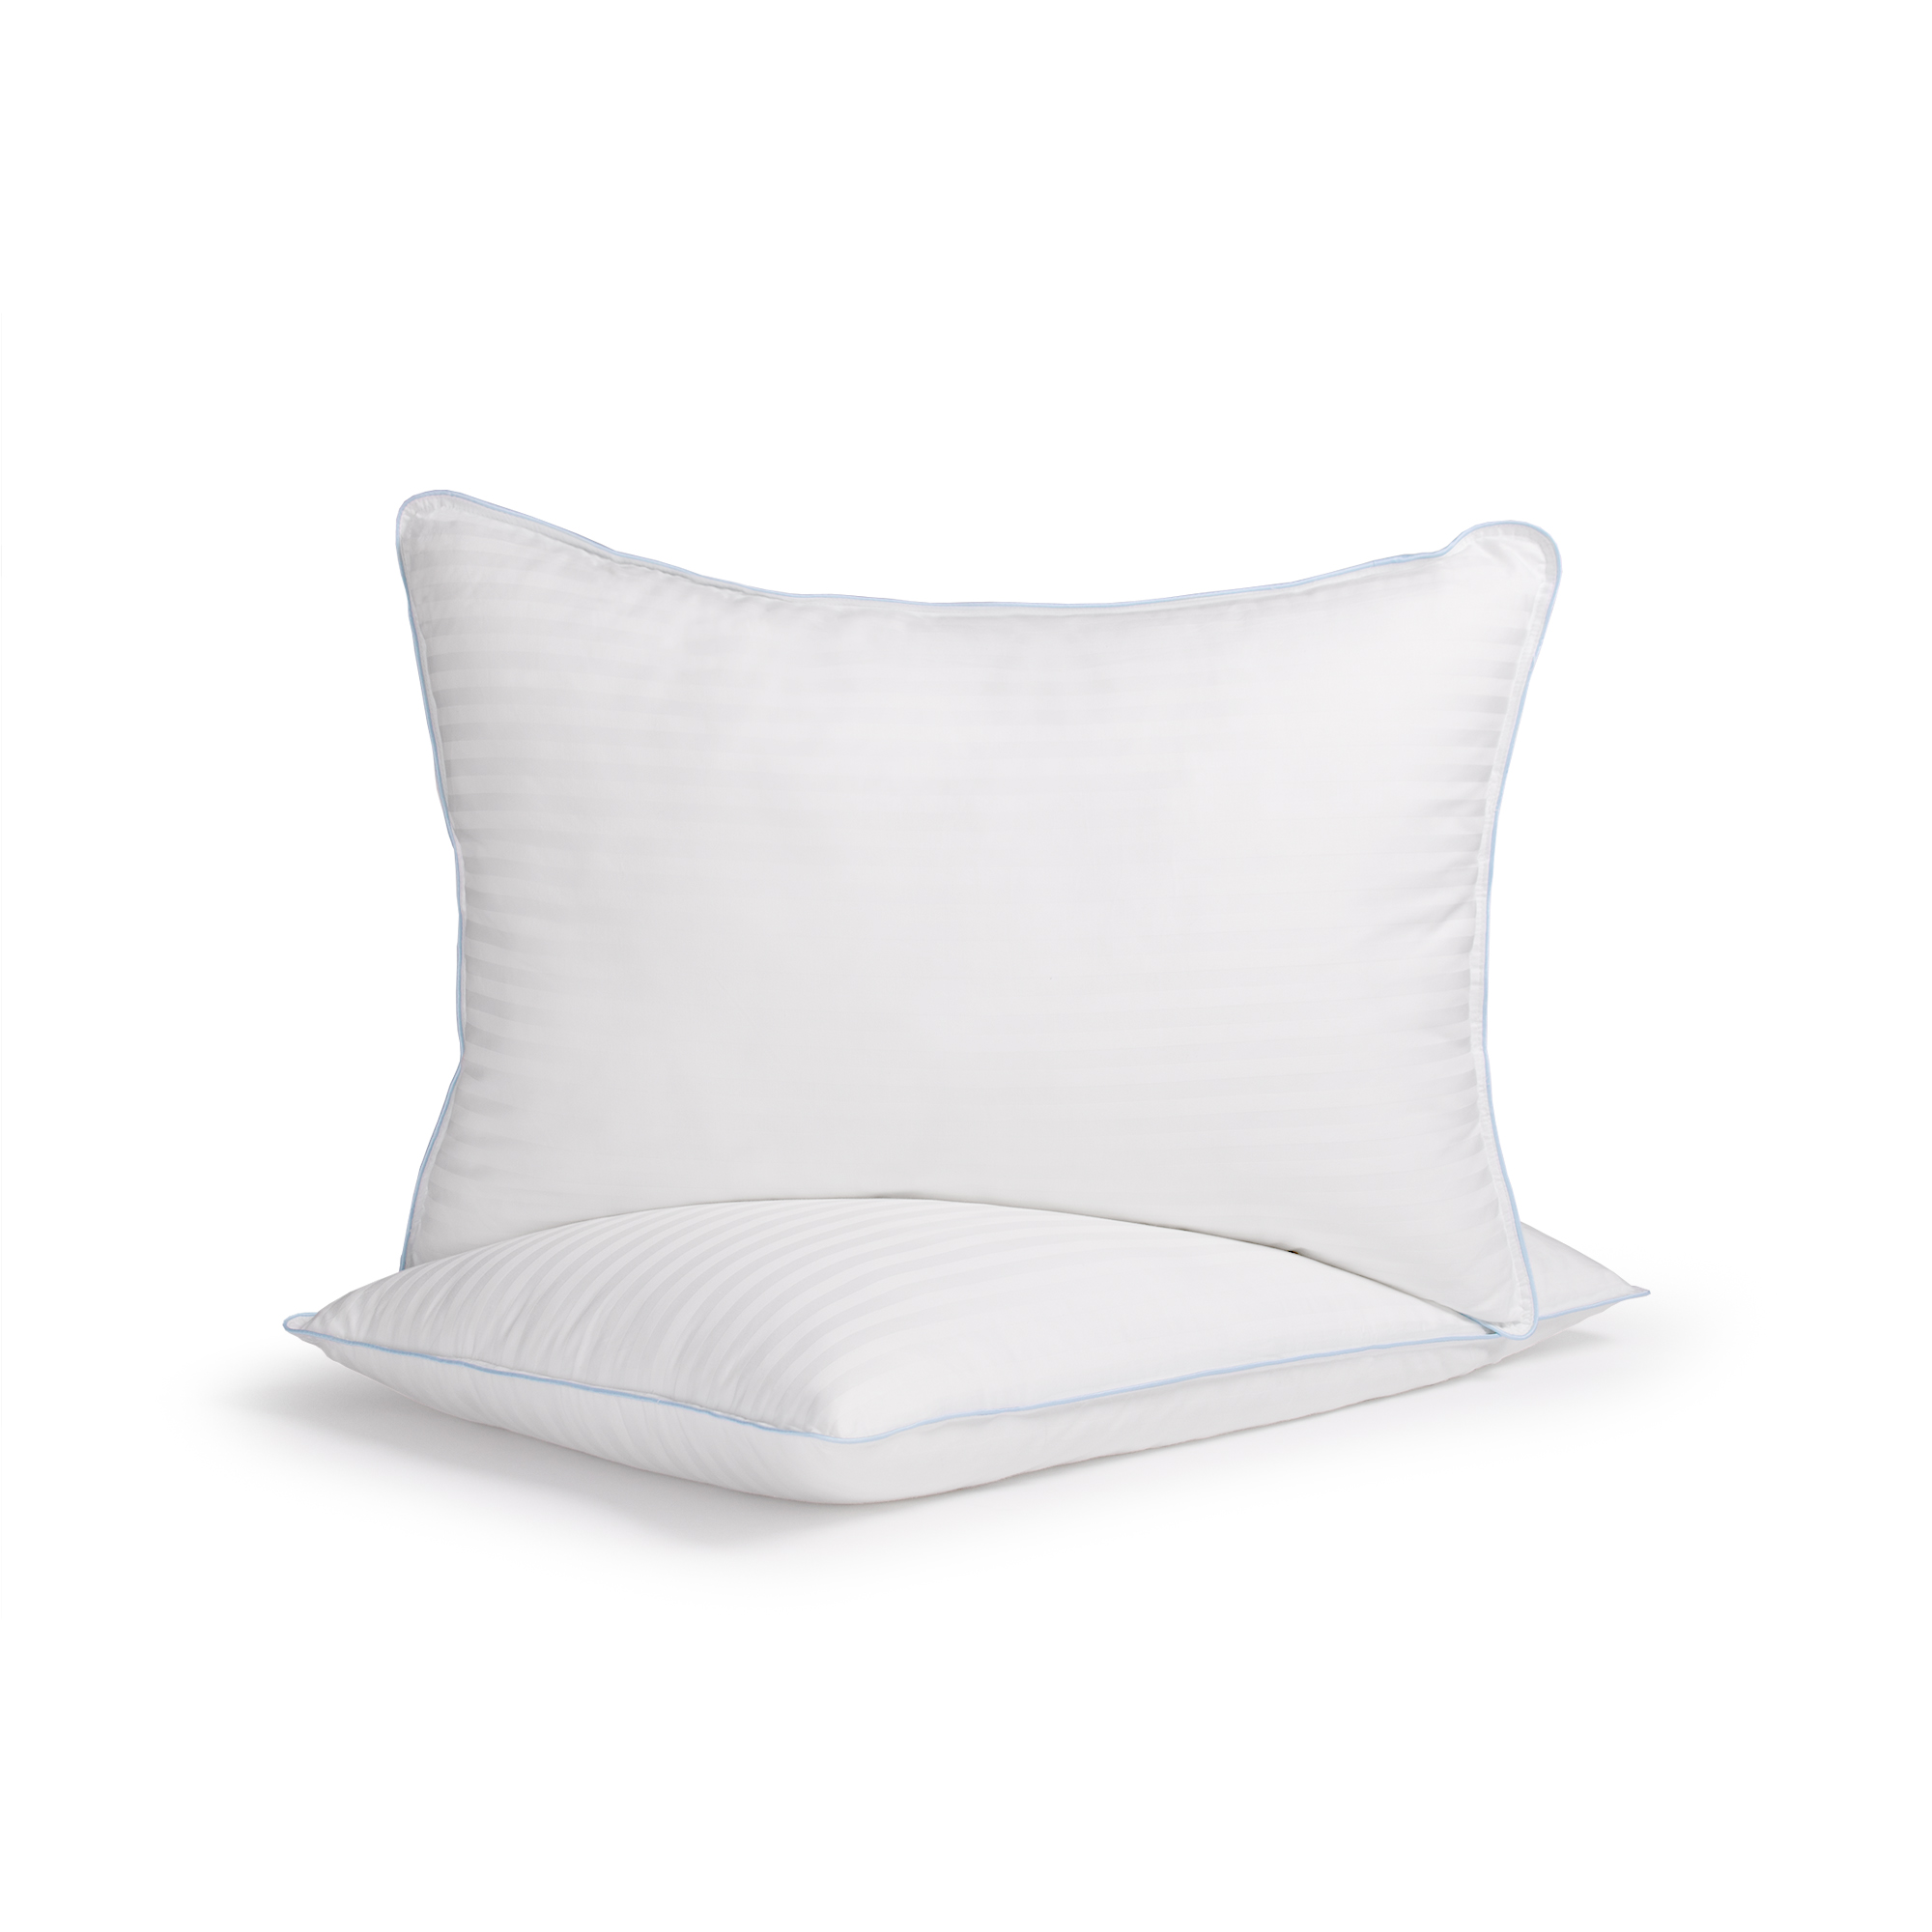 2 Pack Medium Firmness Down Alternative Bed Pillow, Standard - eLuxury - image 1 of 6